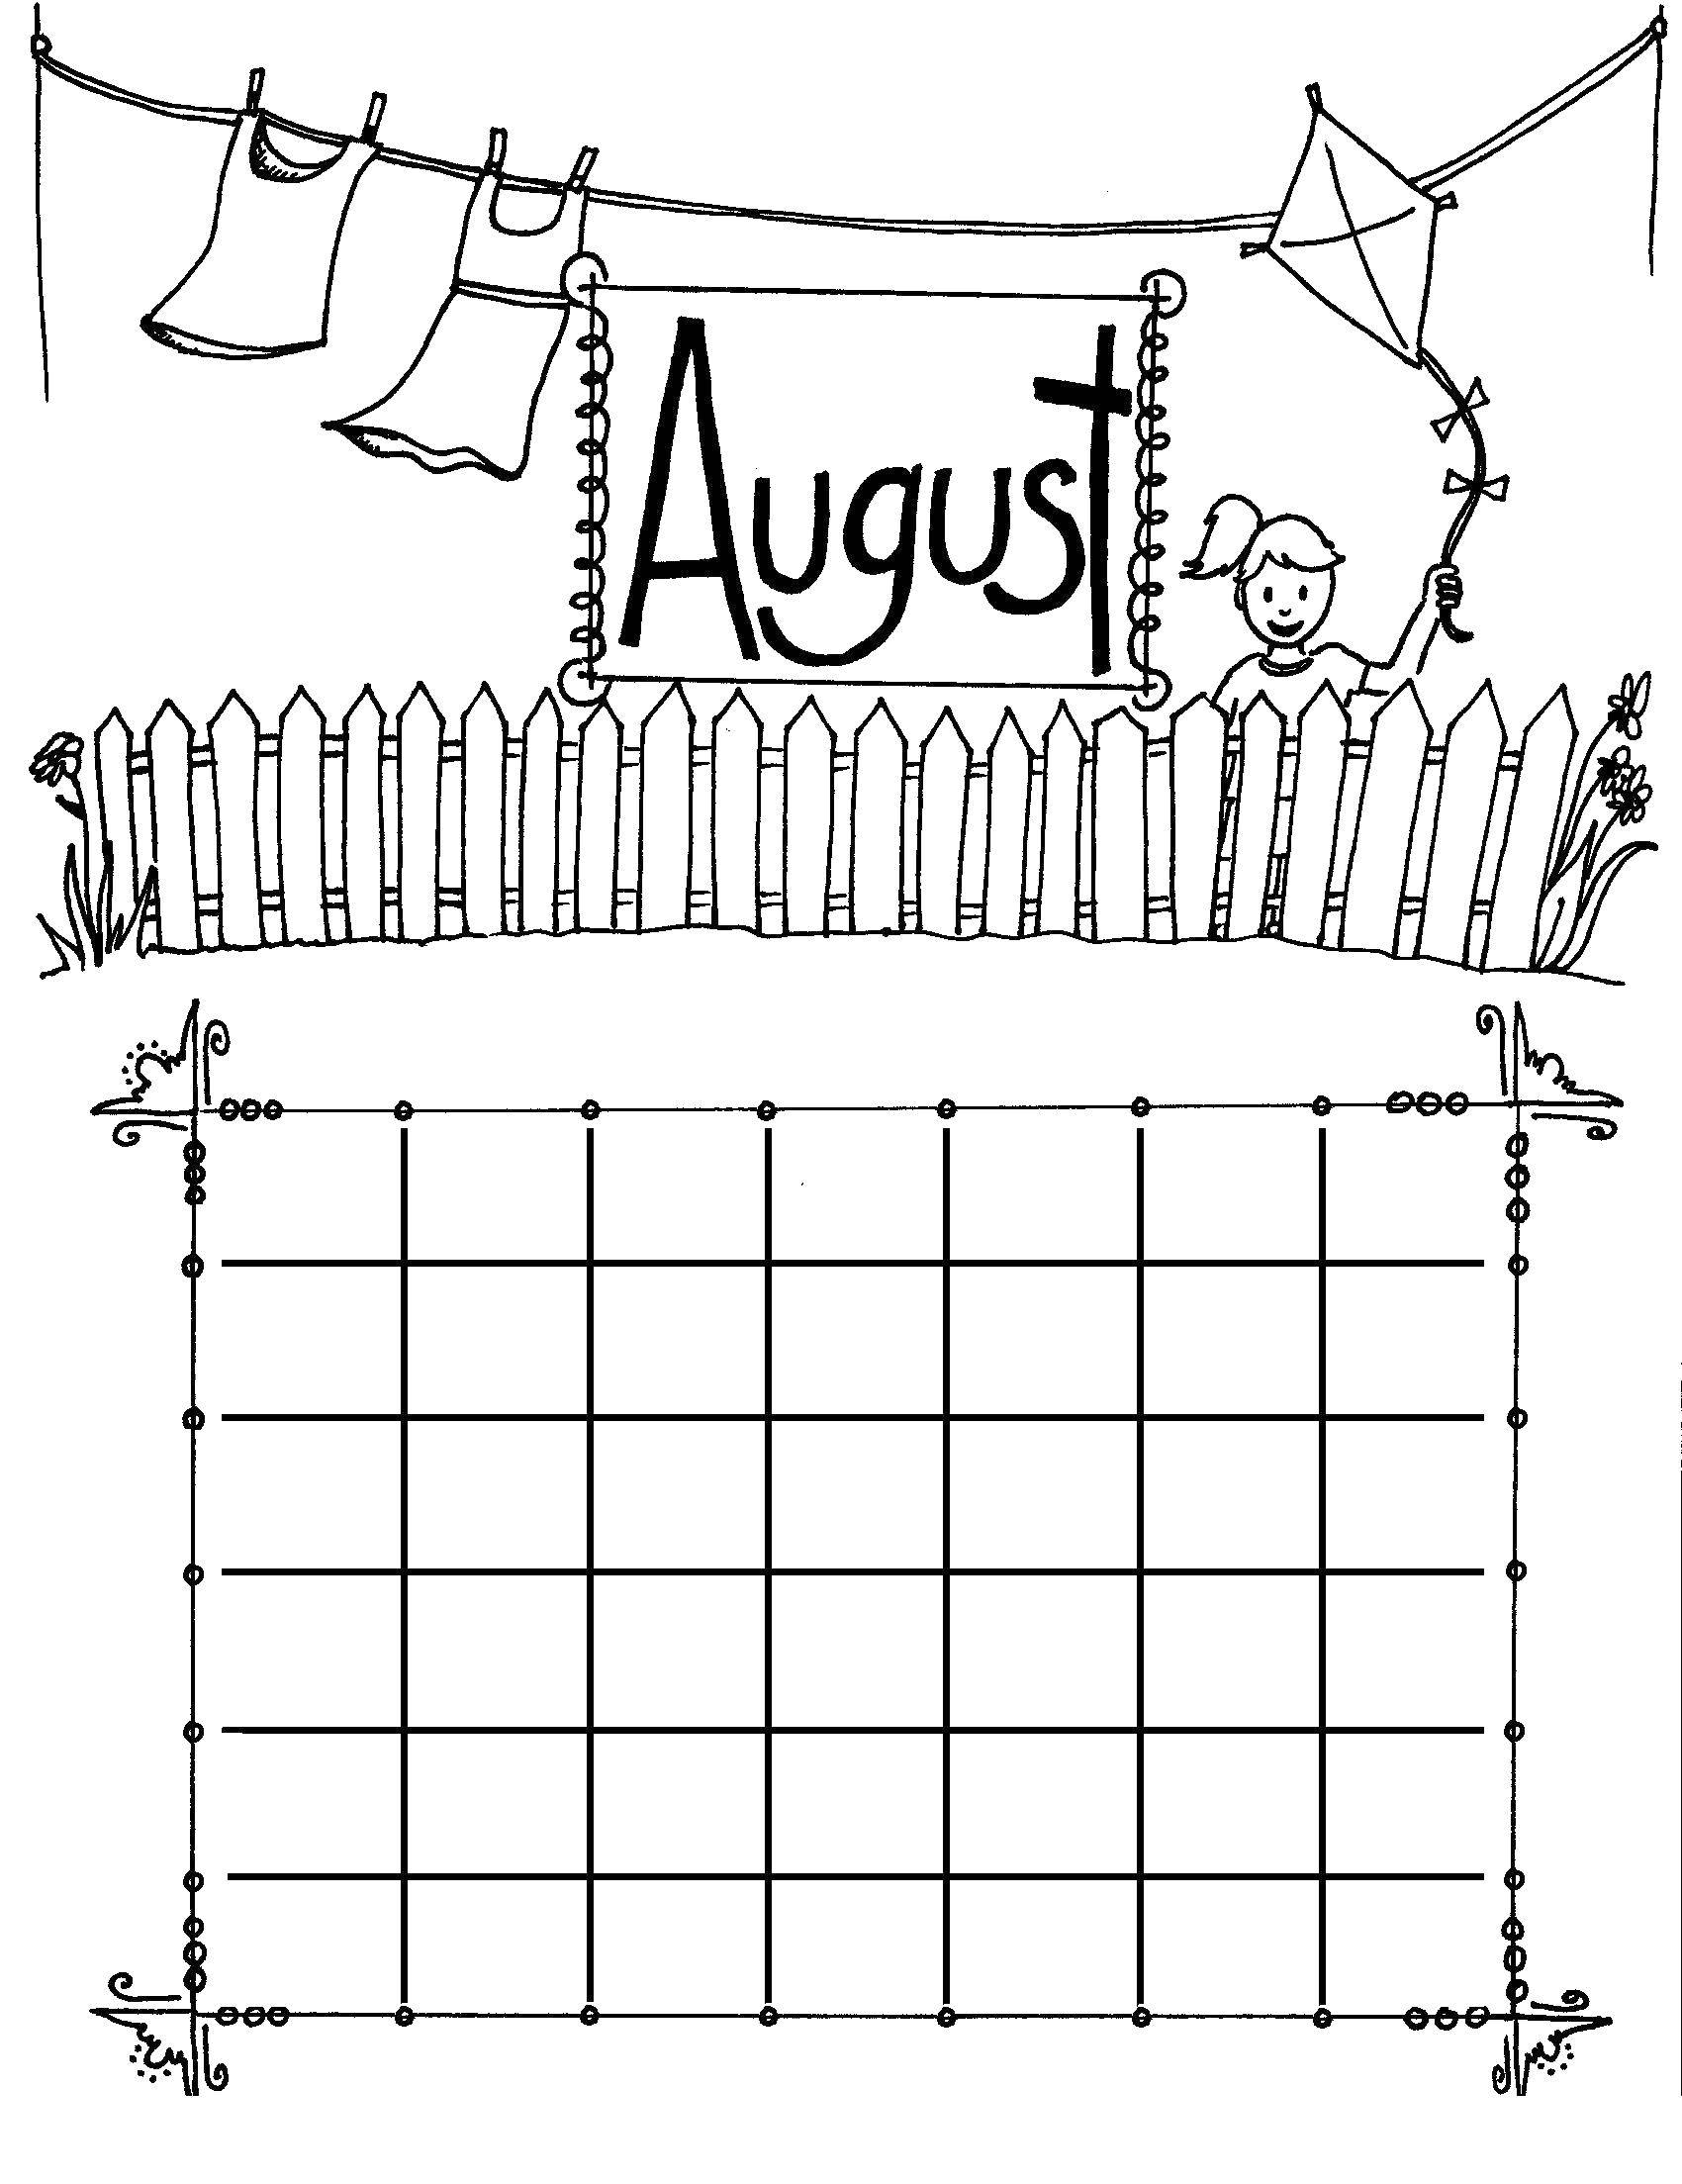 Coloring Calendar August. Category Calendar. Tags:  Calendar.